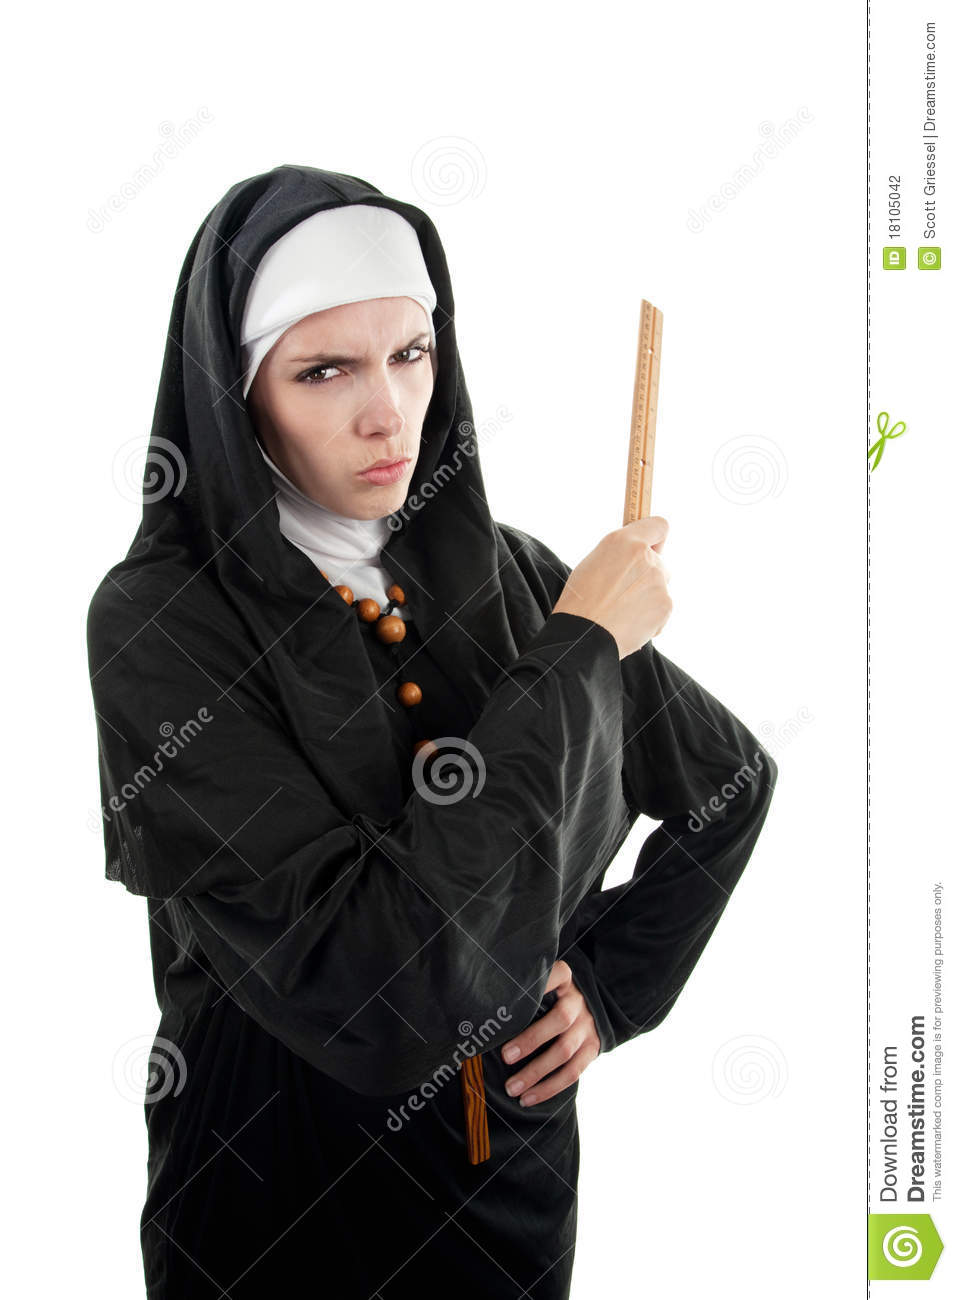 Nun Clipart Angry Nun With Ruler